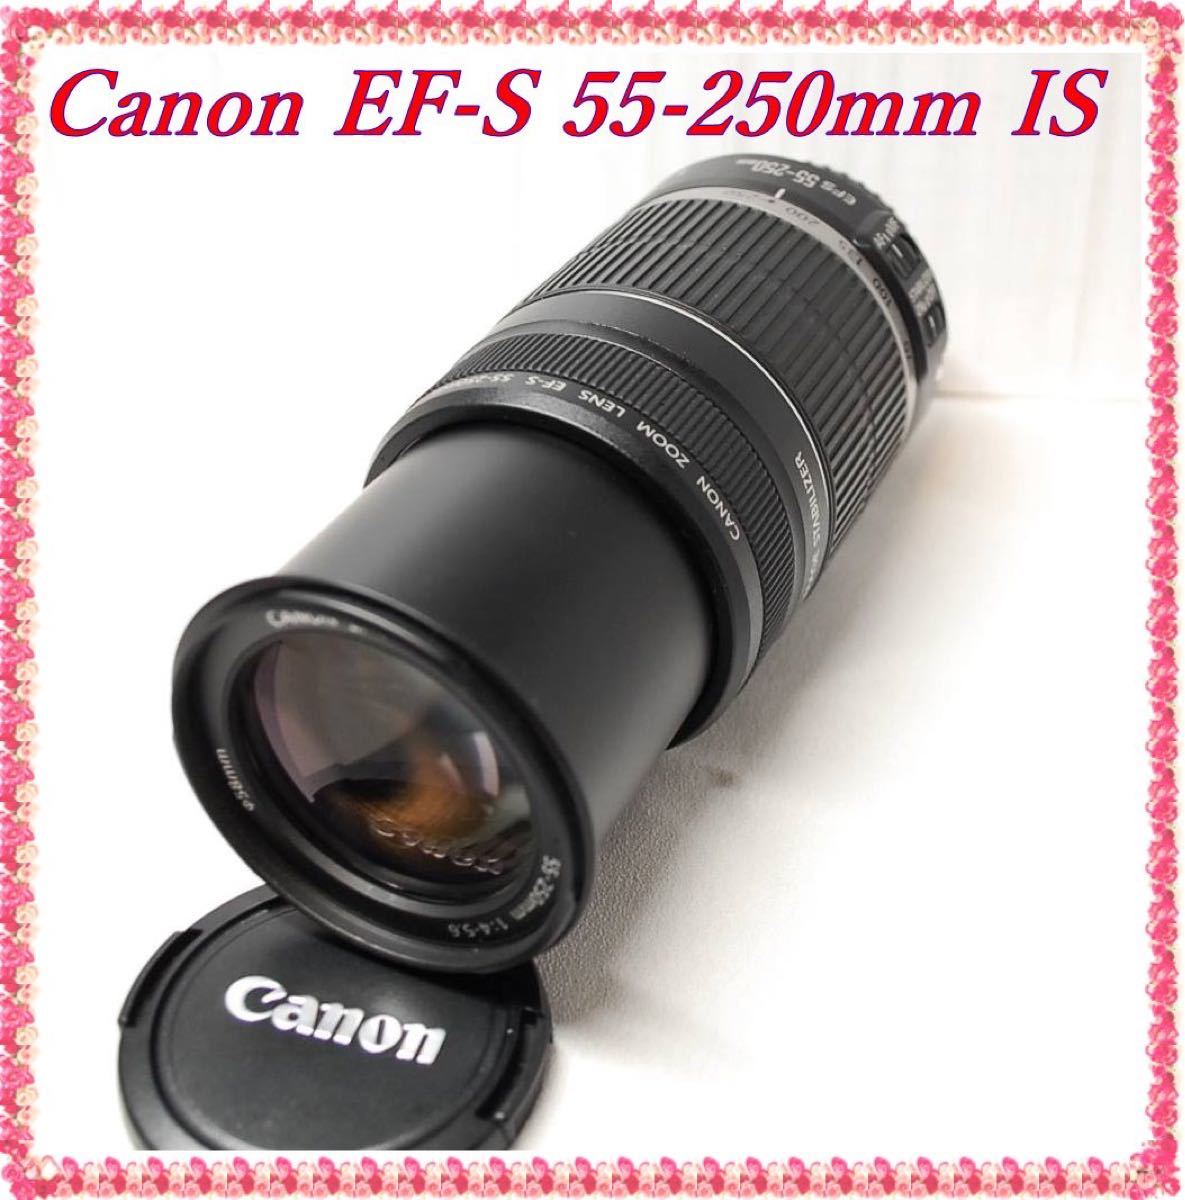 Canon ef-s 55-250mm F4-5.6 IS II 手ぶれ補正 売り純正品 - service.tatsumi.co.jp